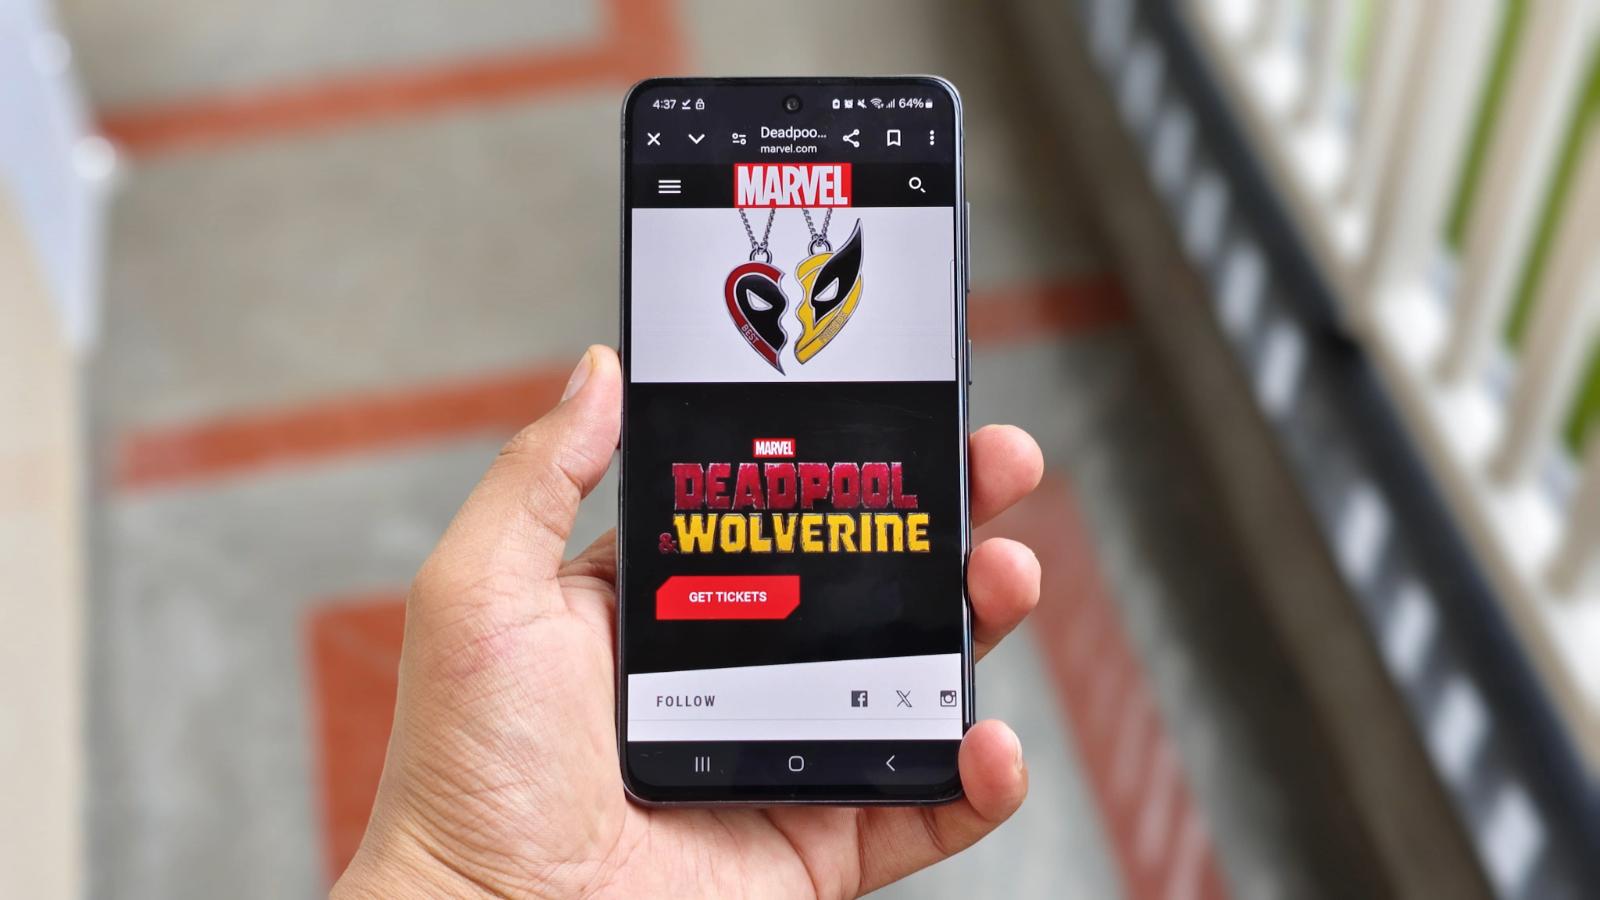 Deadpool & Wolverine on Android